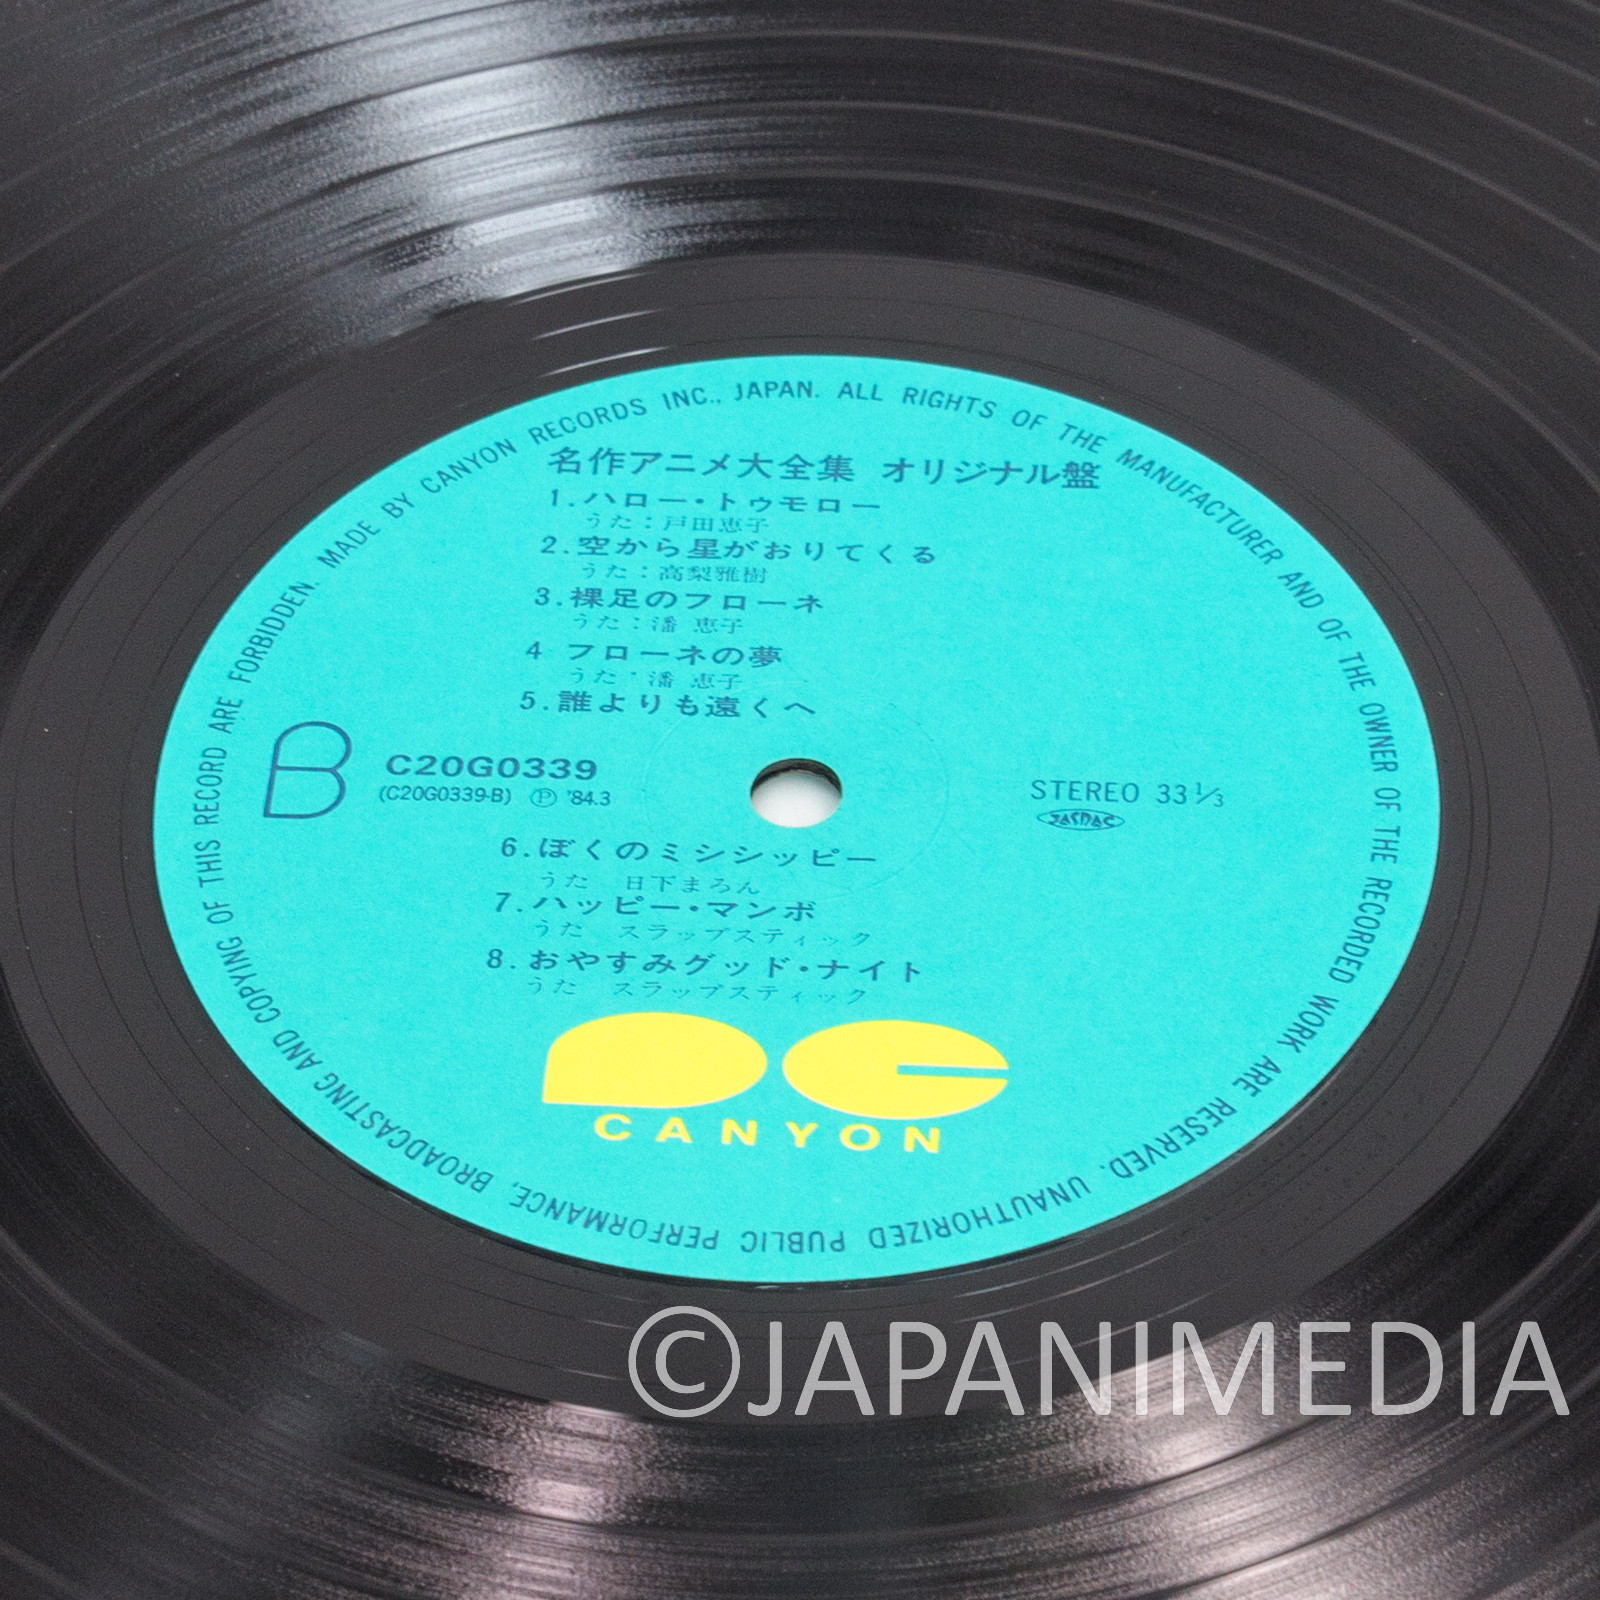 World Masterpiece Theater NHK TV Anime Song Collection Vinyl LP Record C20G0339